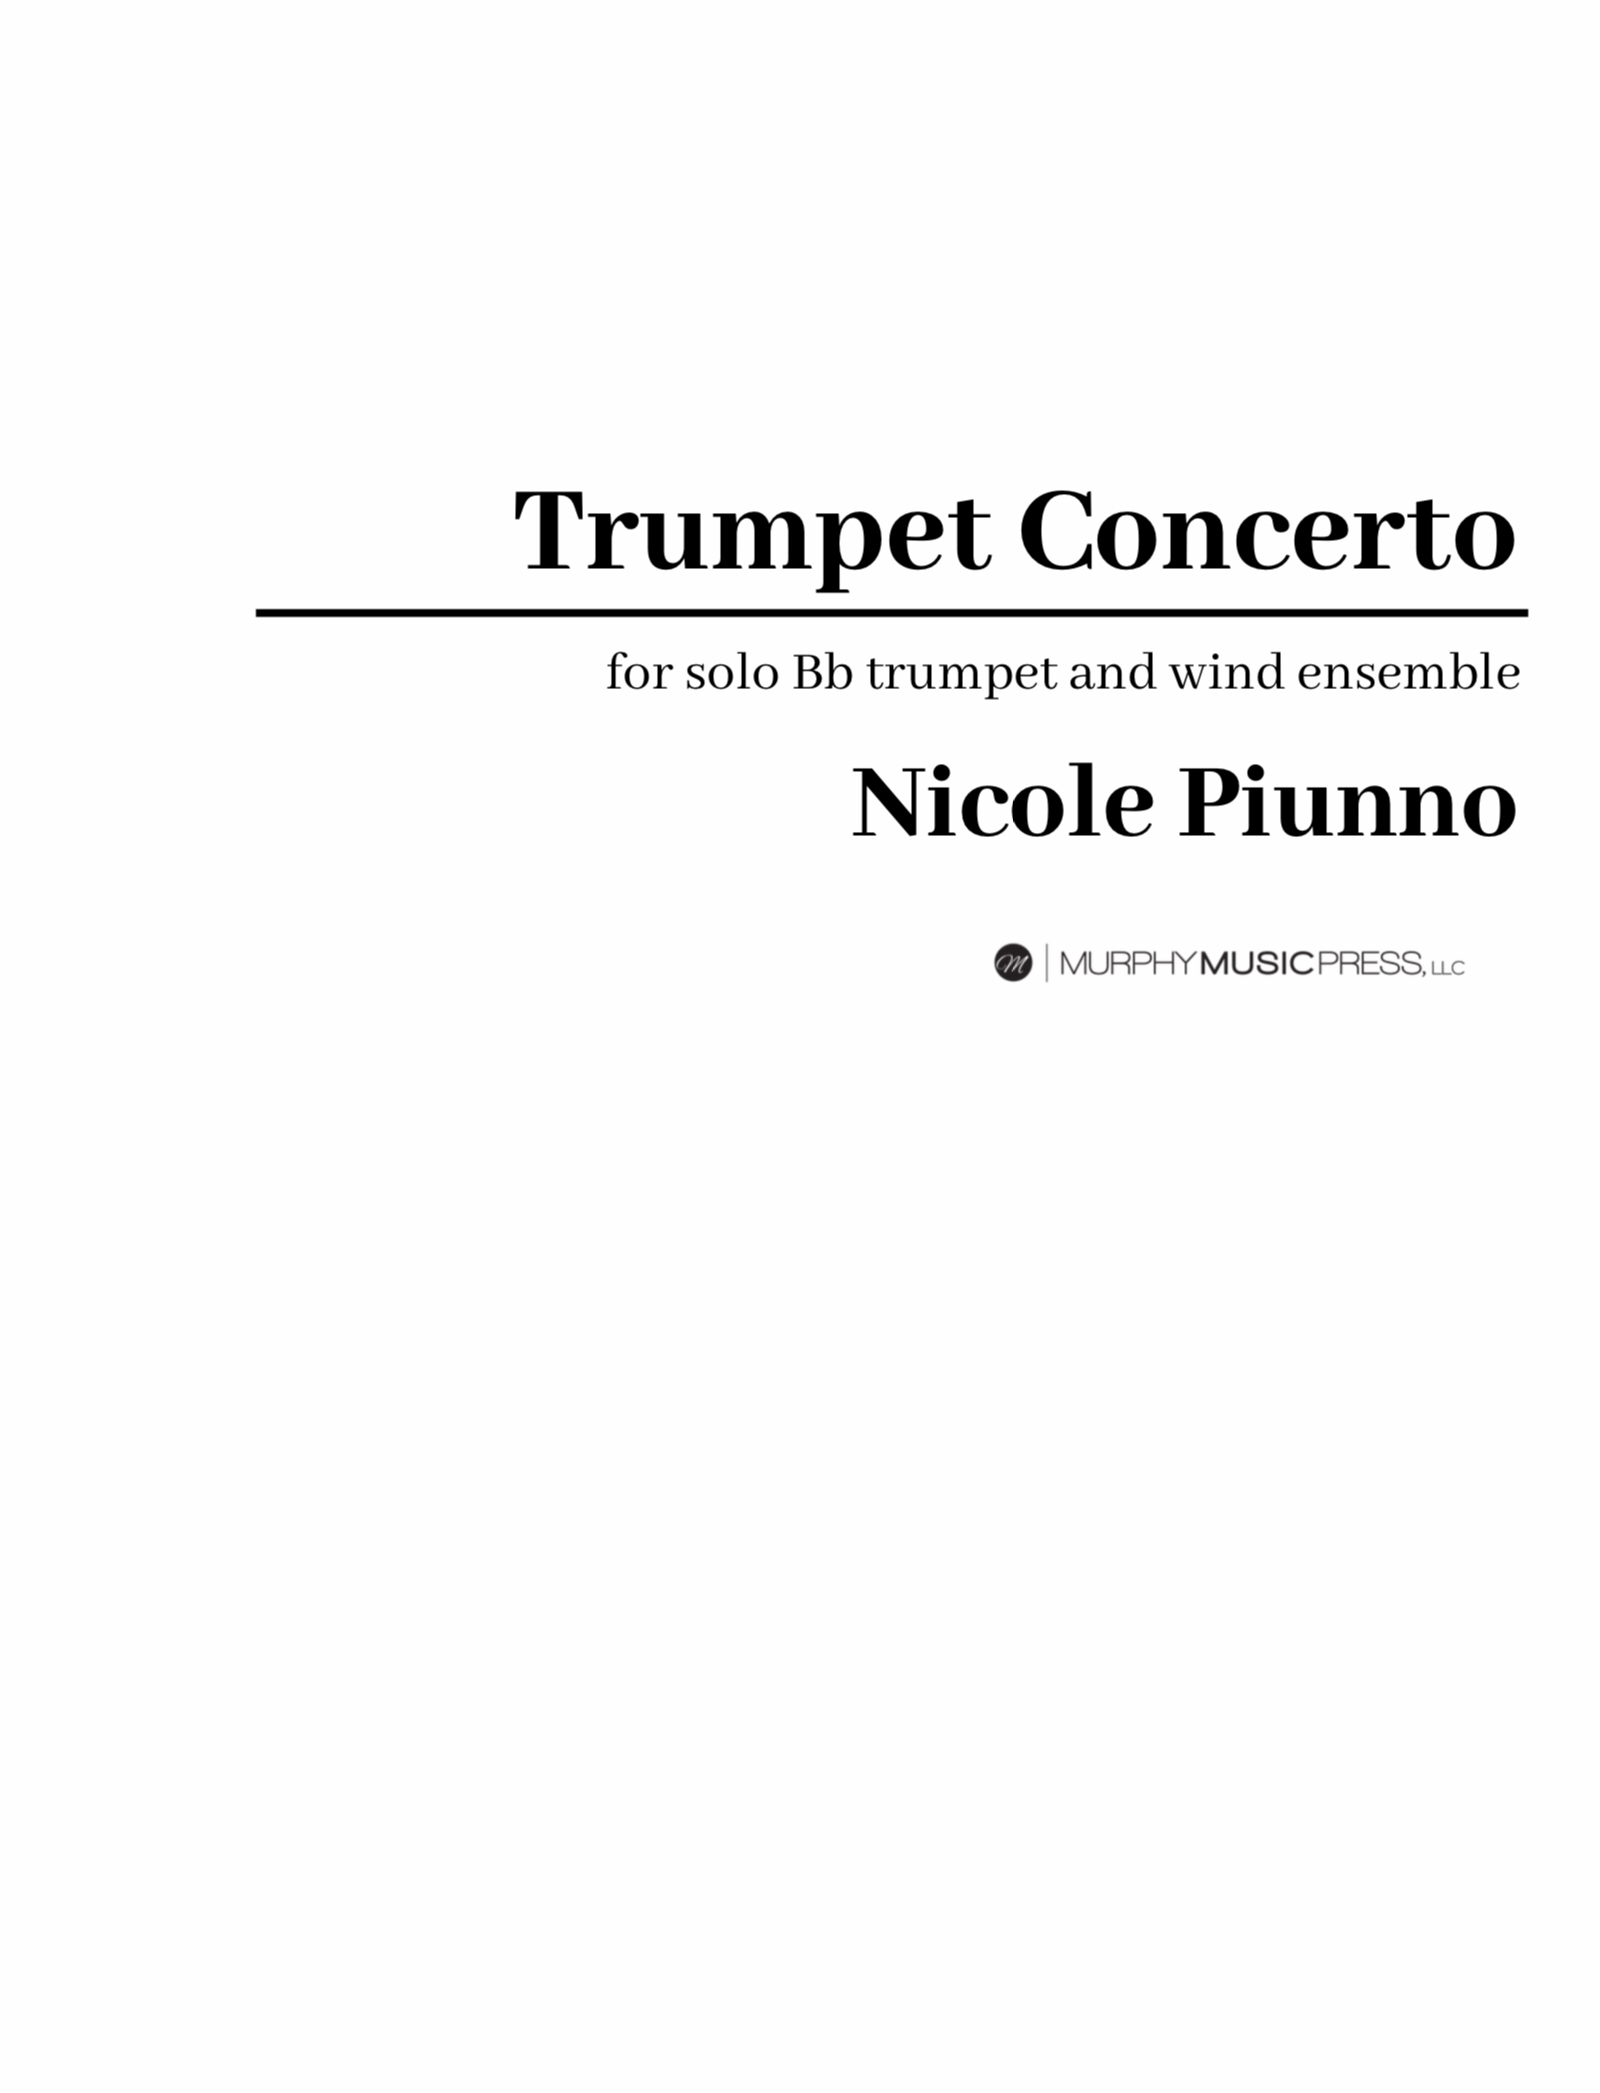 Concerto For Trumpet And Wind Ensemble by Nicole Piunno 